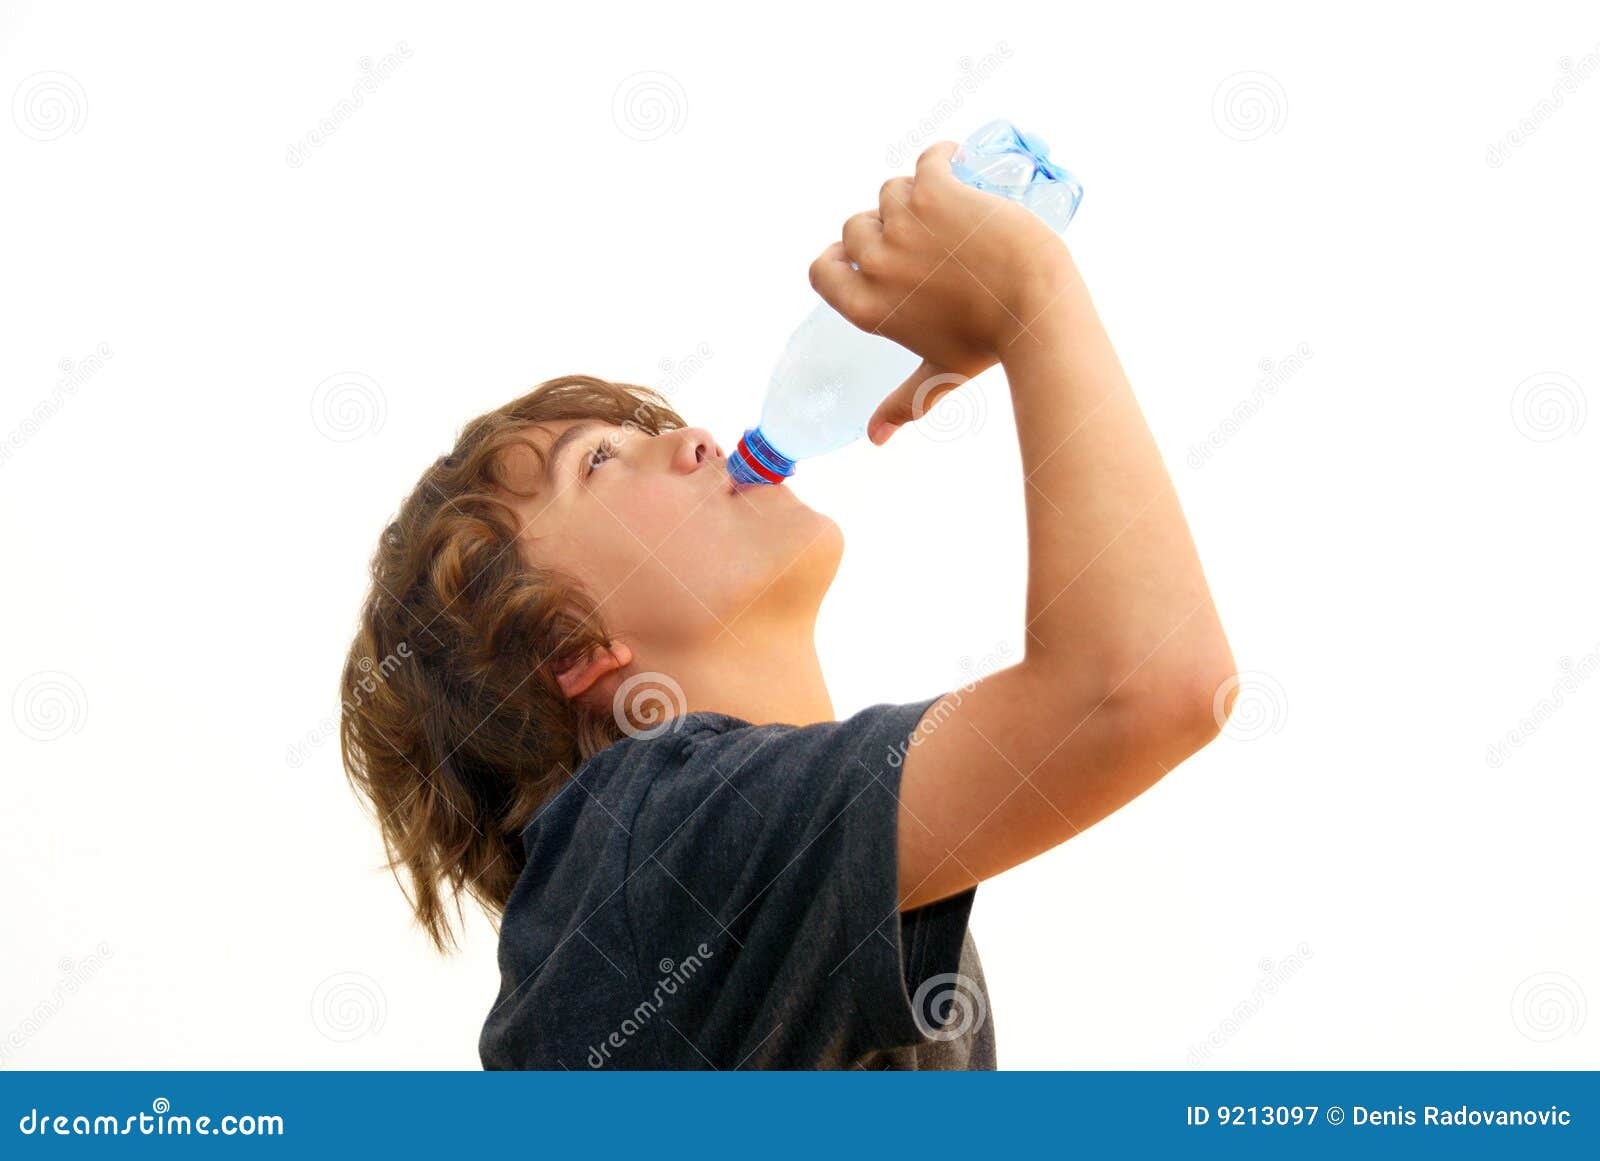 teen drinking water